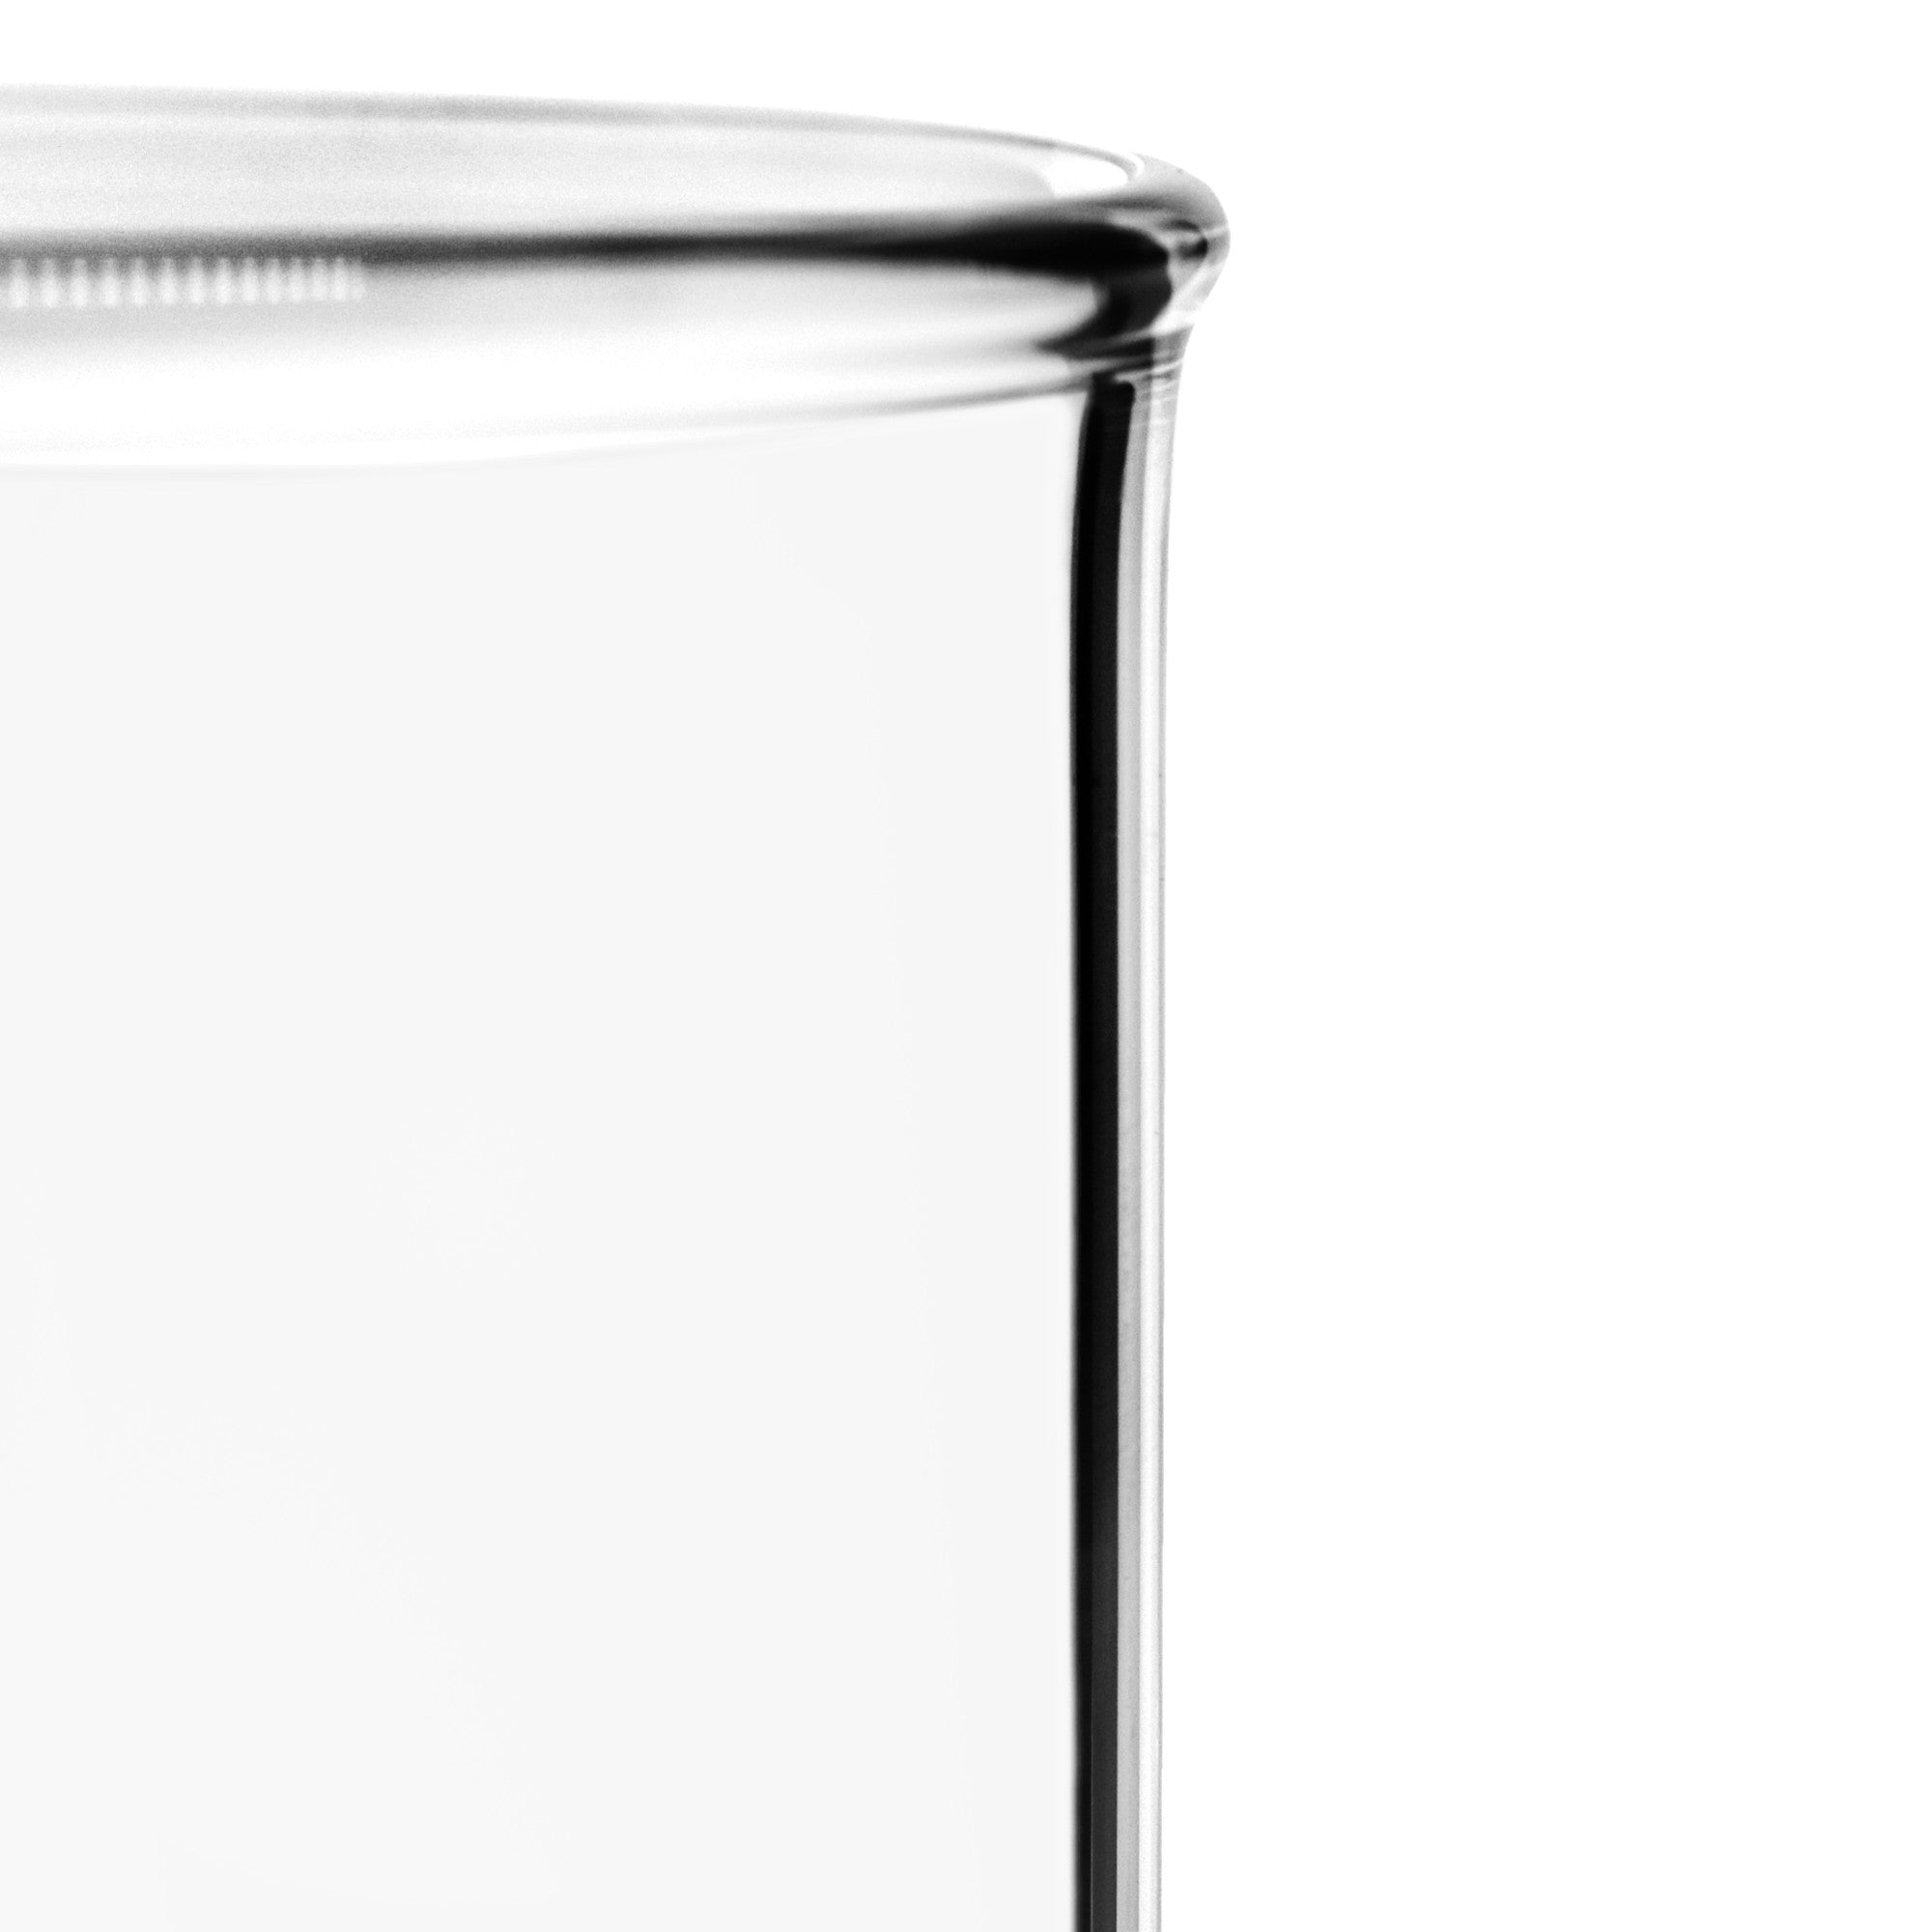 Borosilicate Low Form Beaker, 10,000ml, 500ml Graduation, Autoclavable